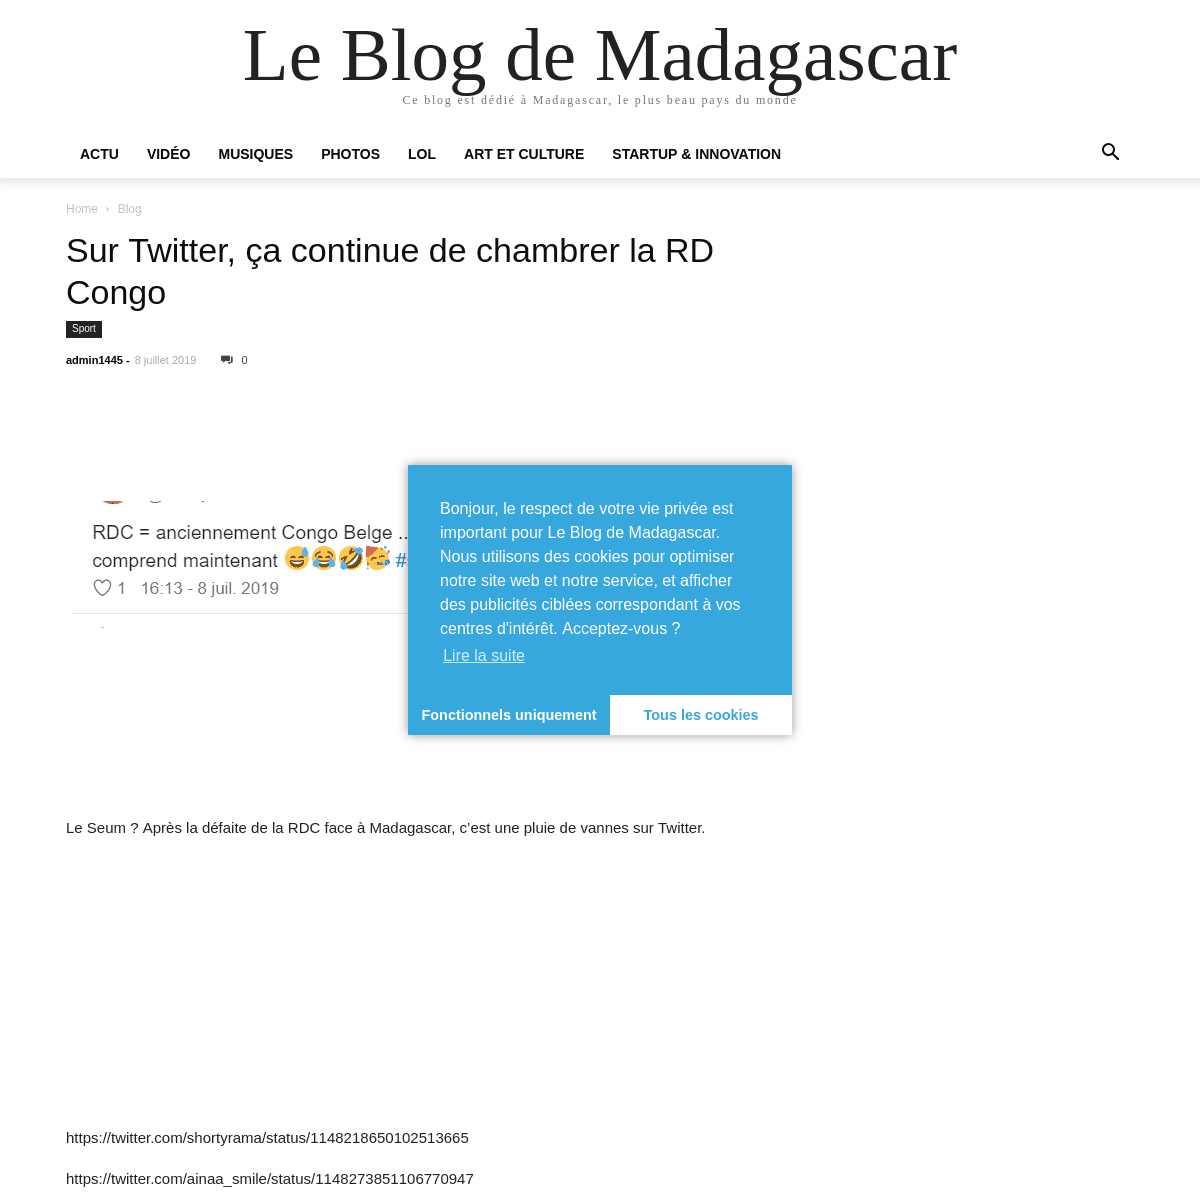 A complete backup of blogdemadagascar.com